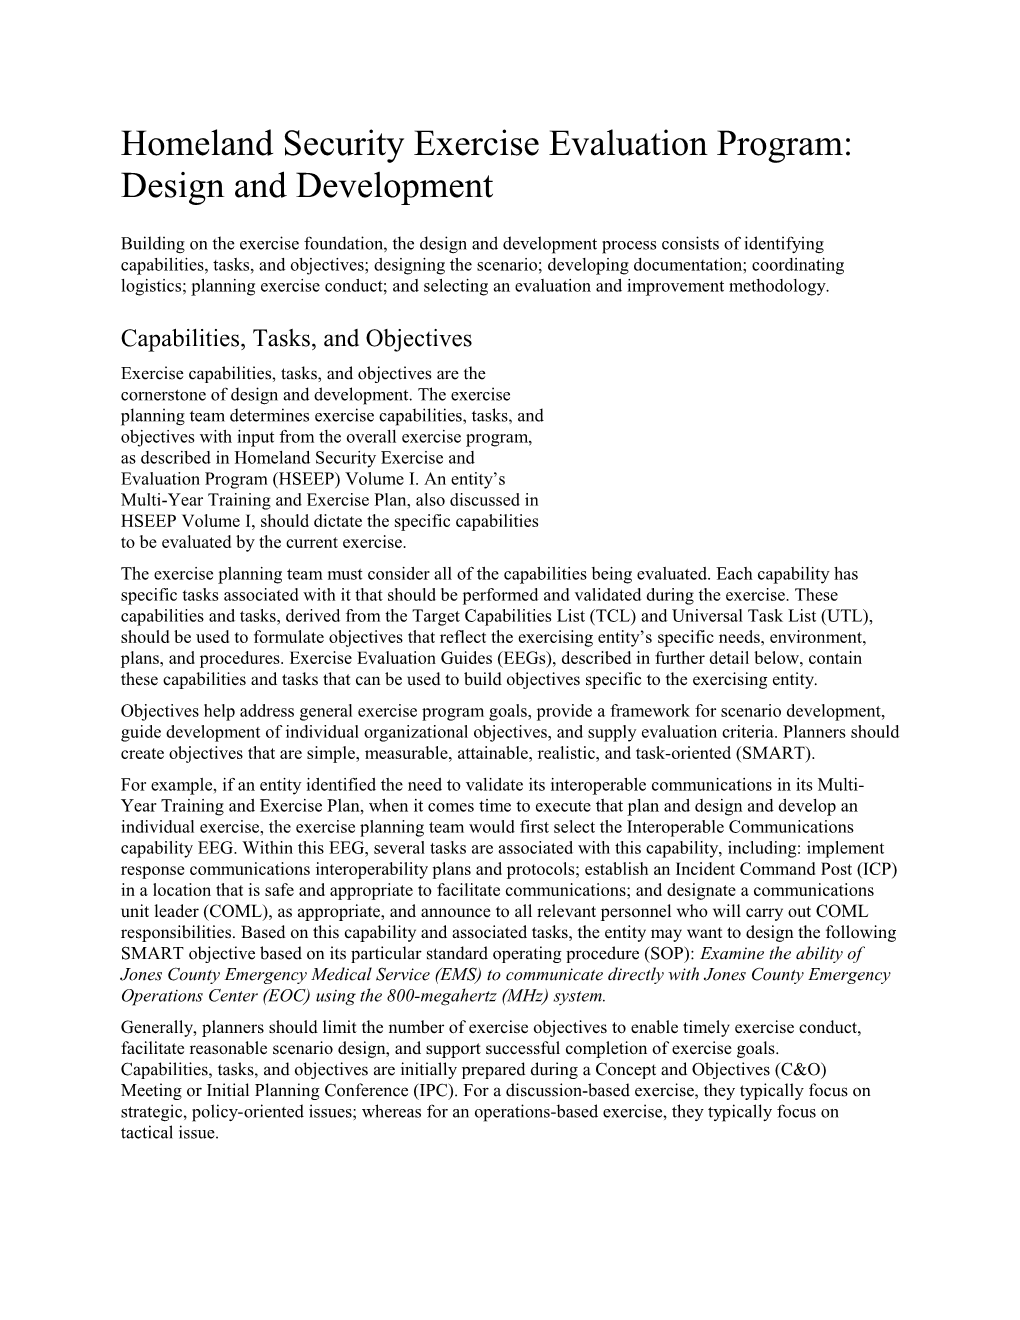 Homeland Security Exercise Evaluation Program: Design and Development